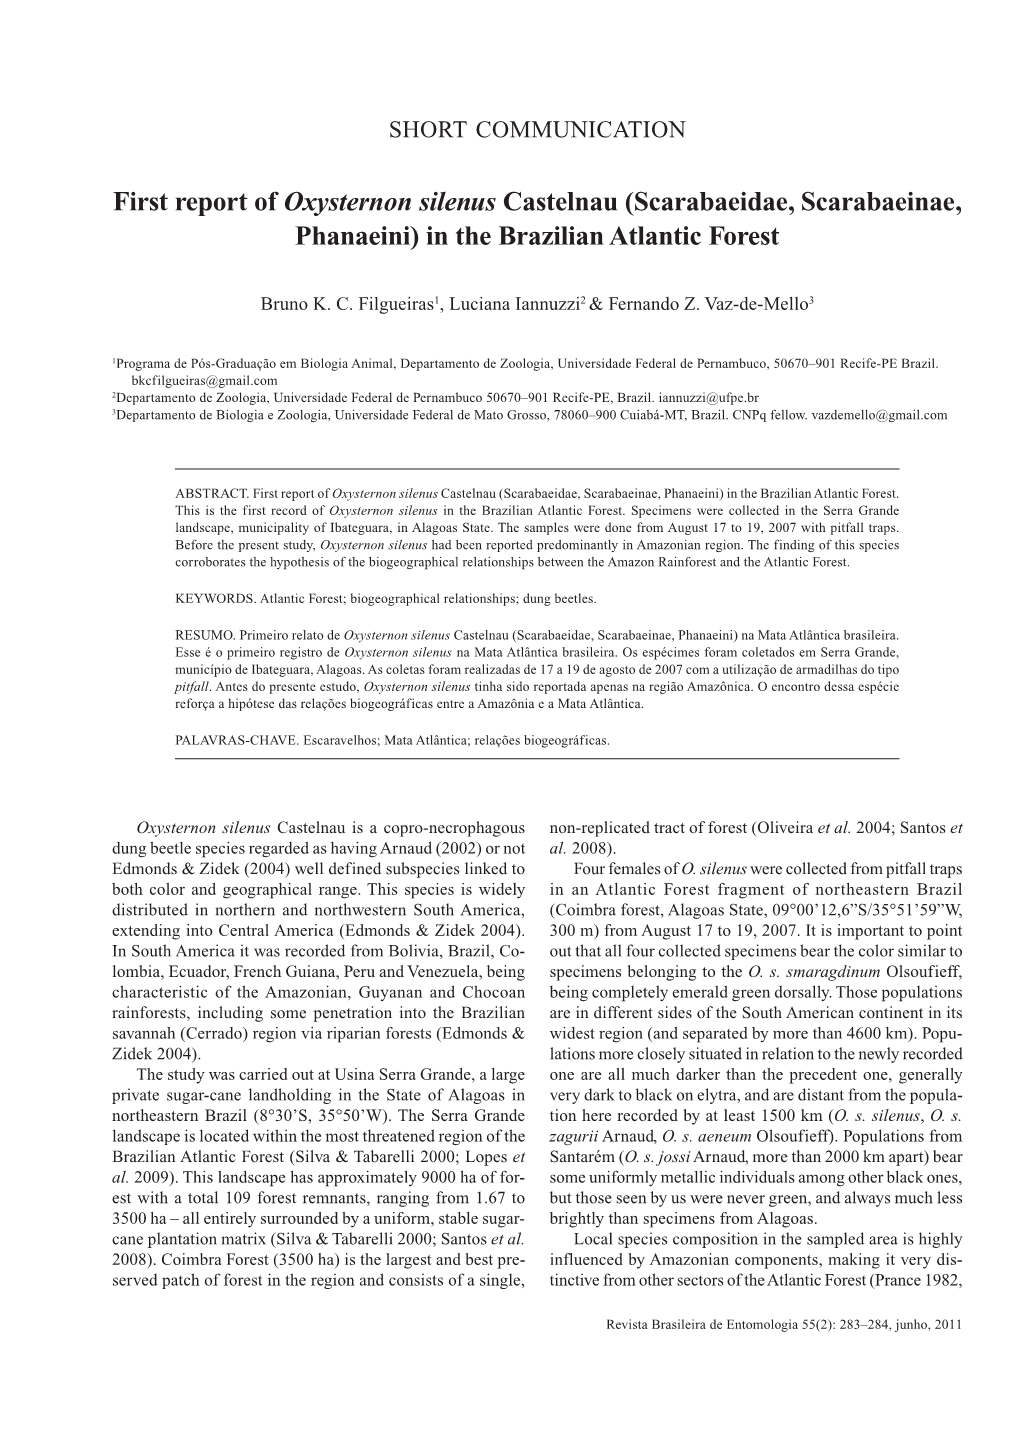 First Report of Oxysternon Silenus Castelnau (Scarabaeidae, Scarabaeinae, Phanaeini) in the Brazilian Atlantic Forest